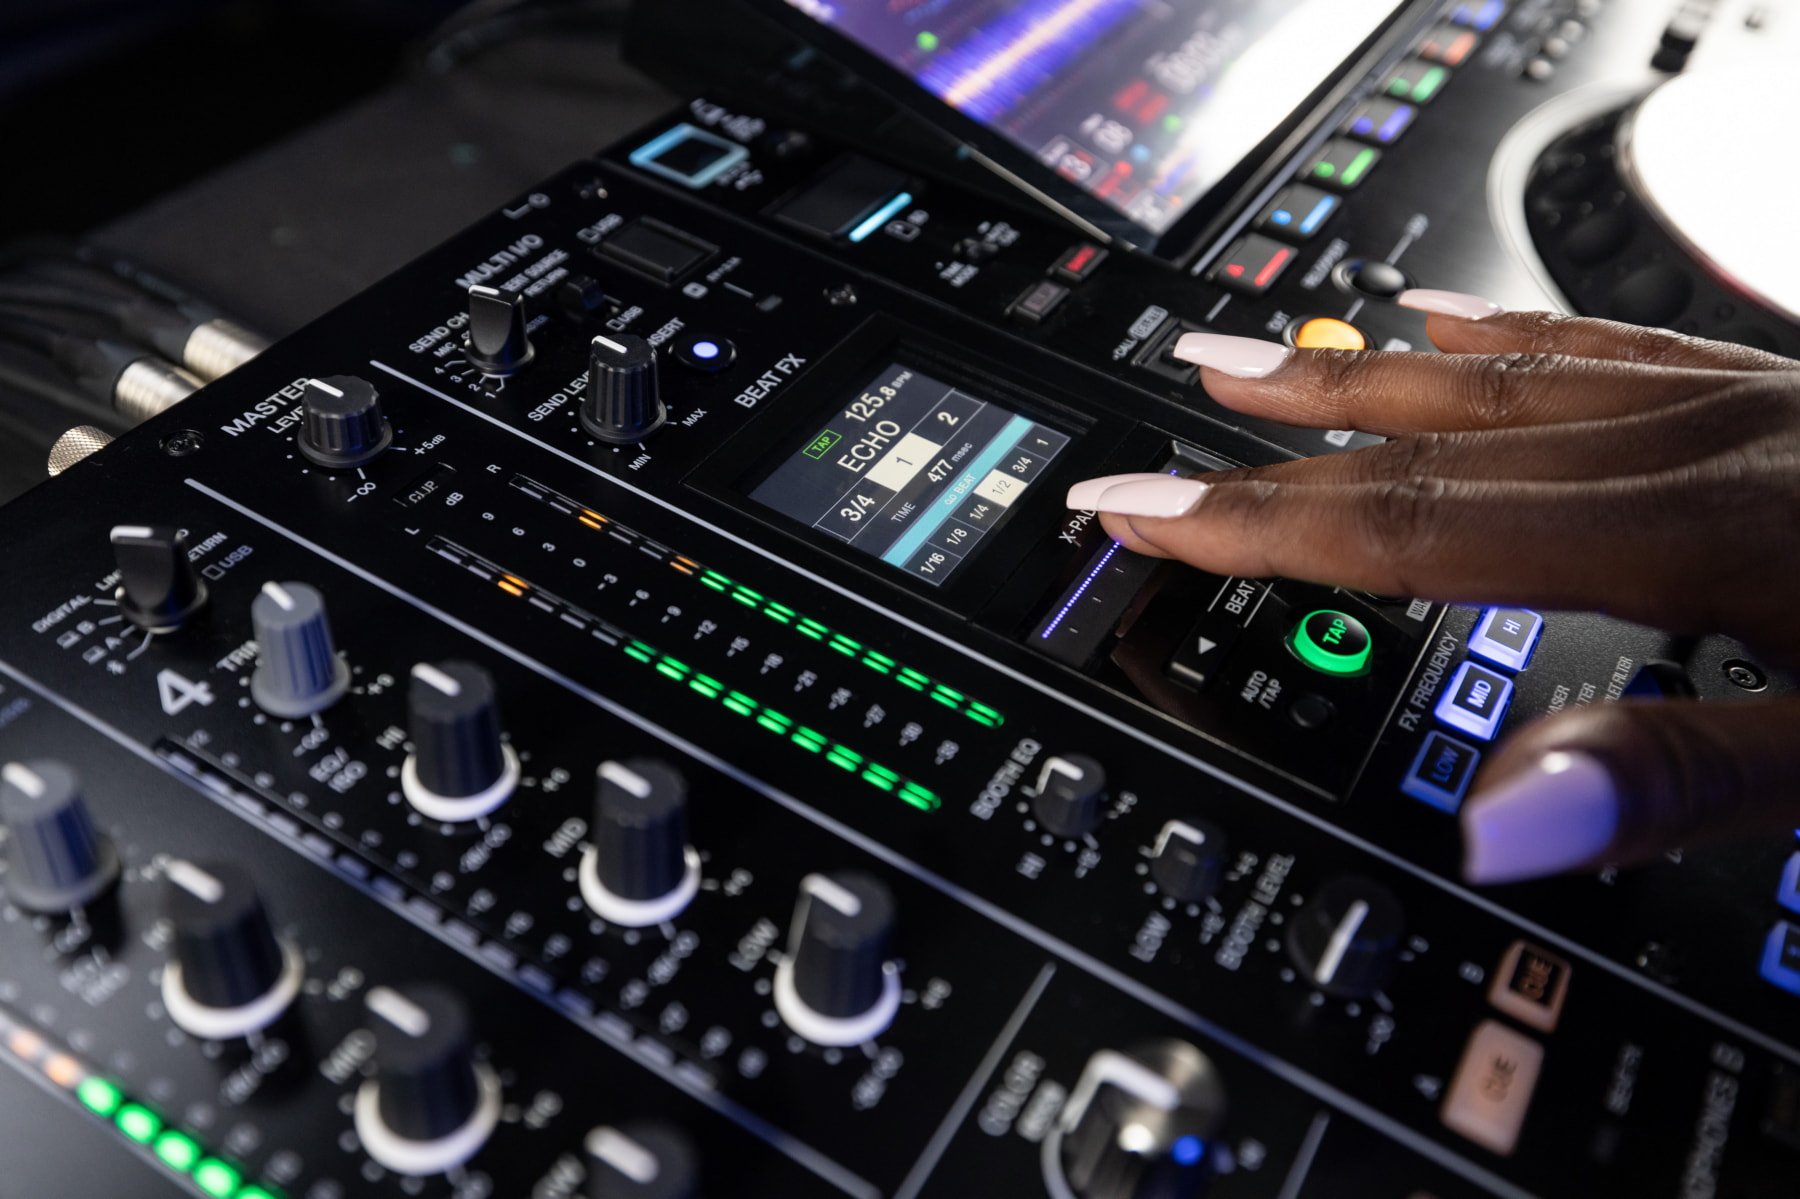 Pioneer DJ Introduces Its Next Generation DJ Mixer, the DJM-A9